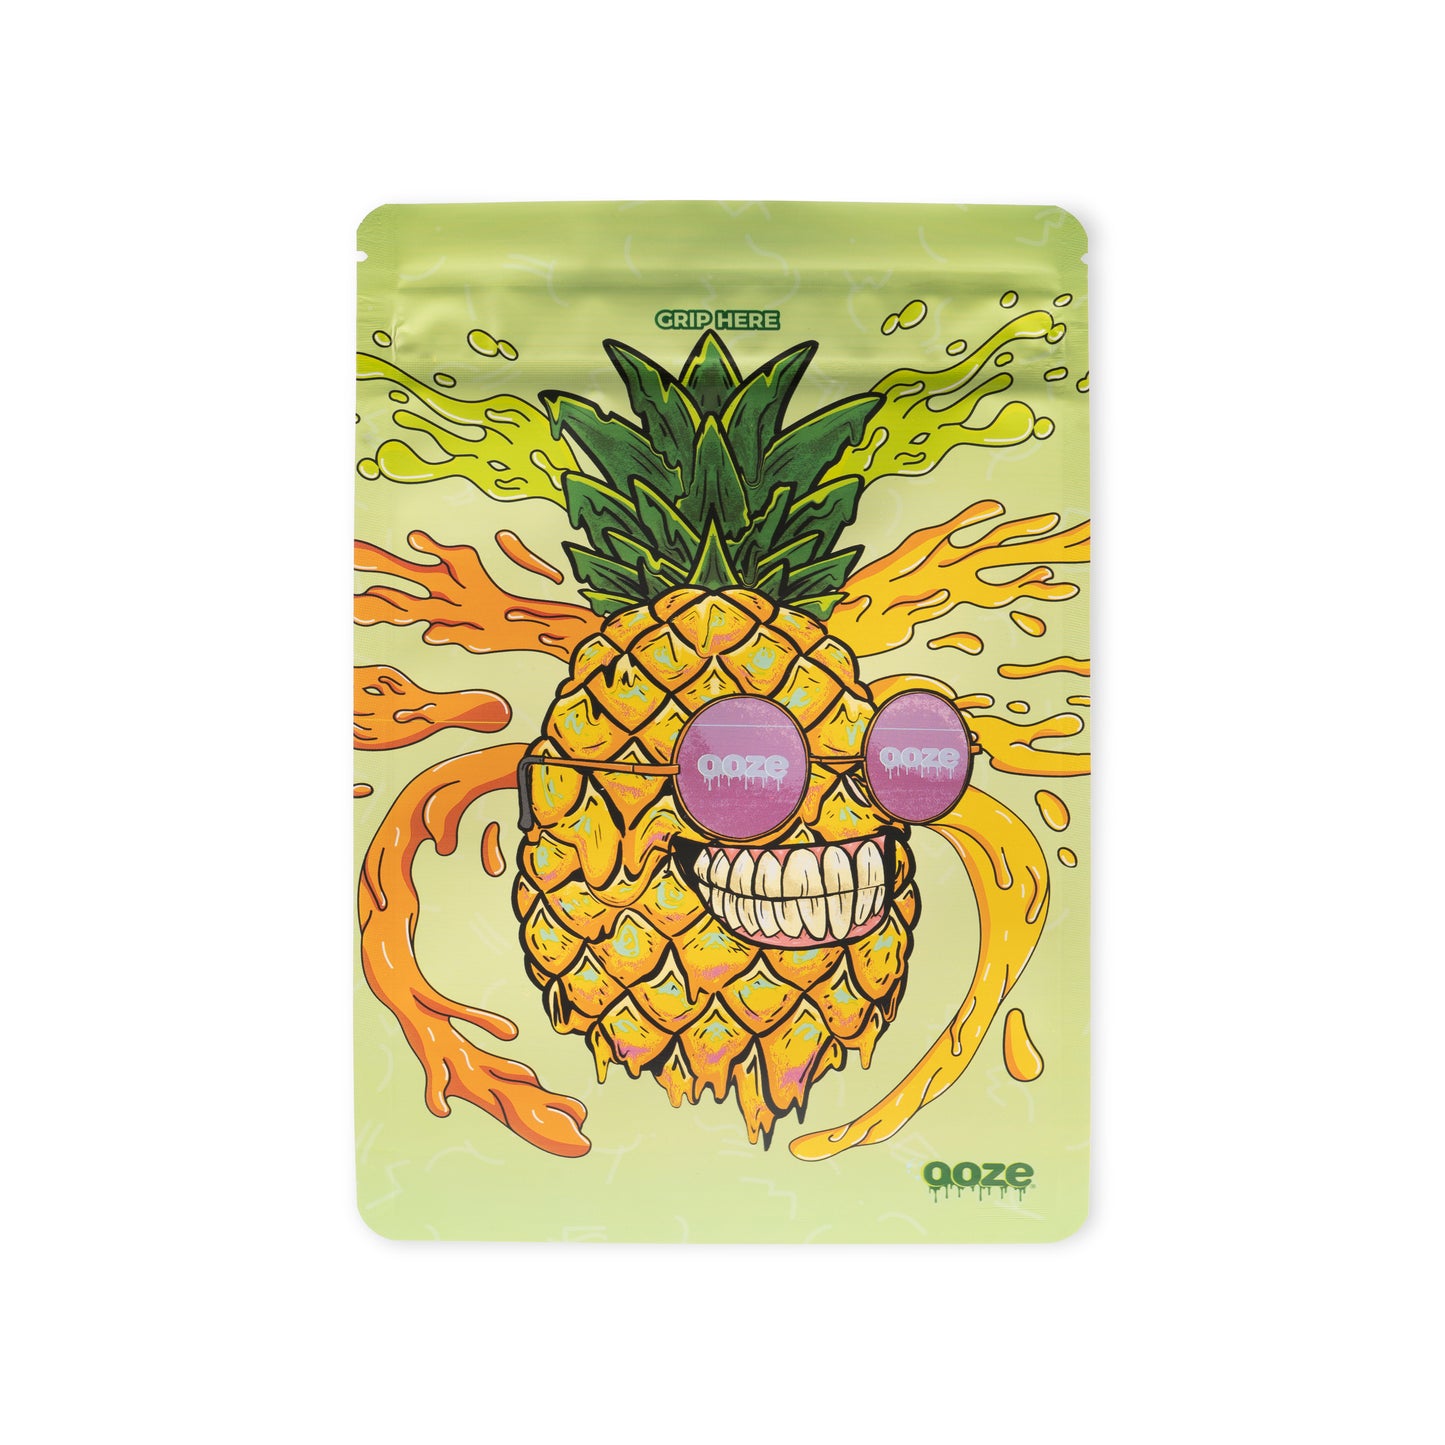 Ooze Designer Series 1 Ounce Mylar Bag 10-Count Box - Mr. Pineapple